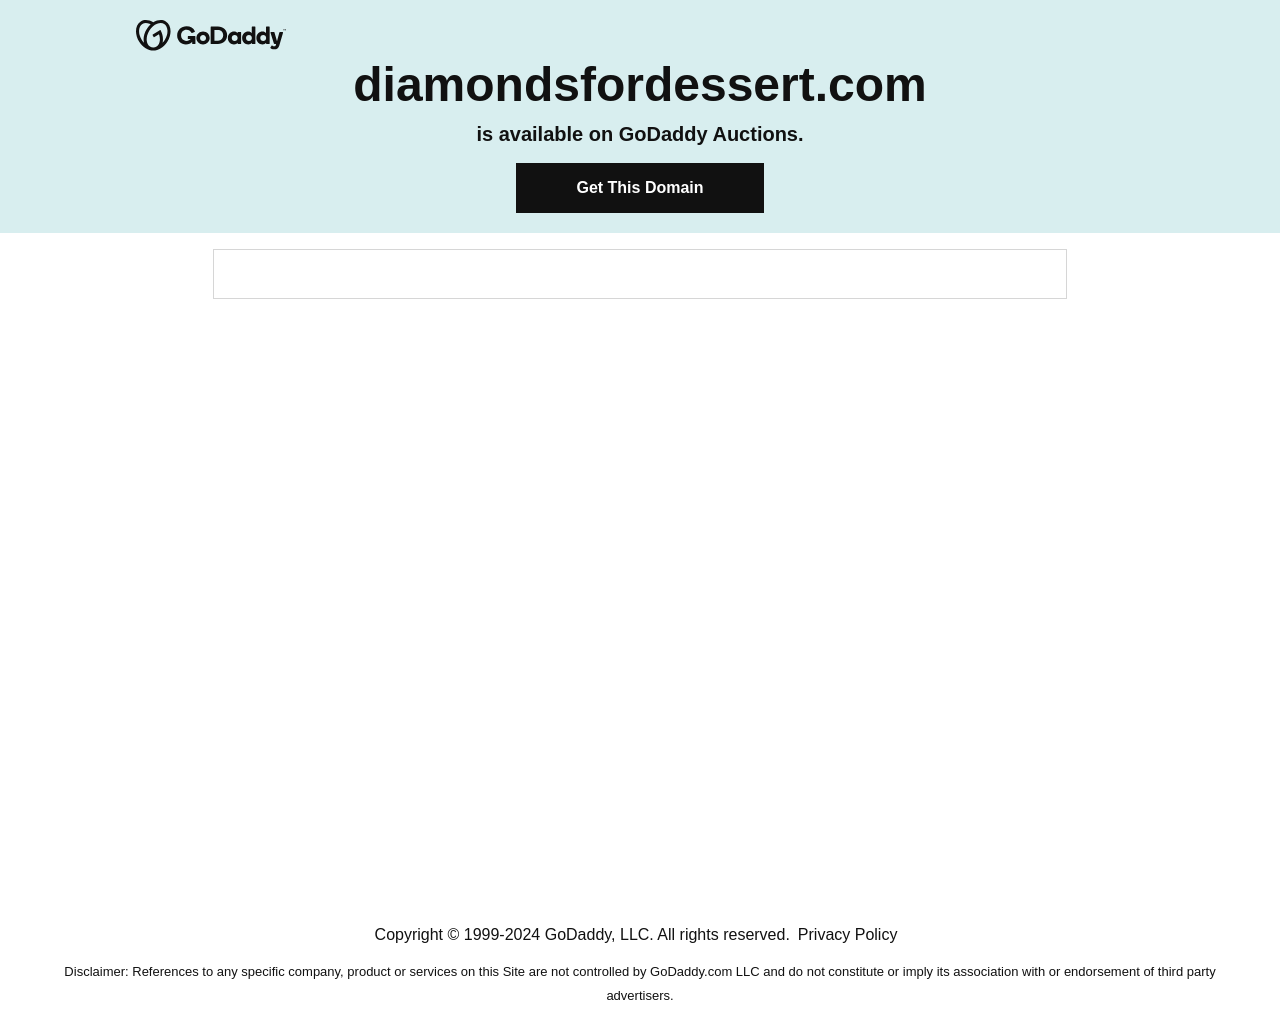 diamondsfordessert.com